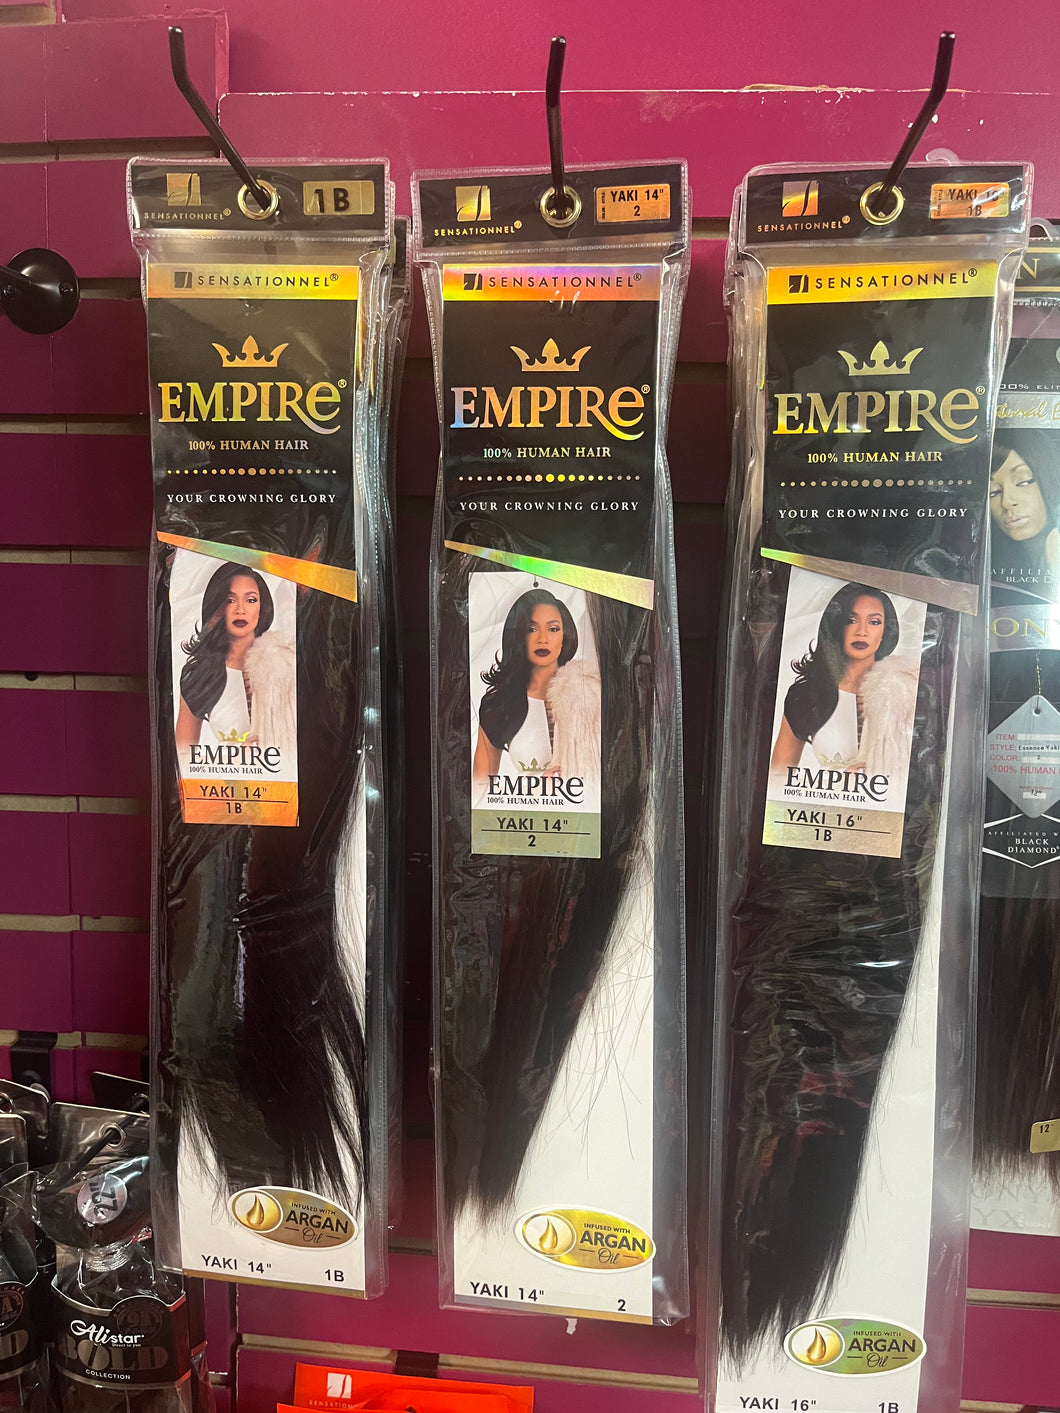 Sensationnel Empire 100% Human Hair